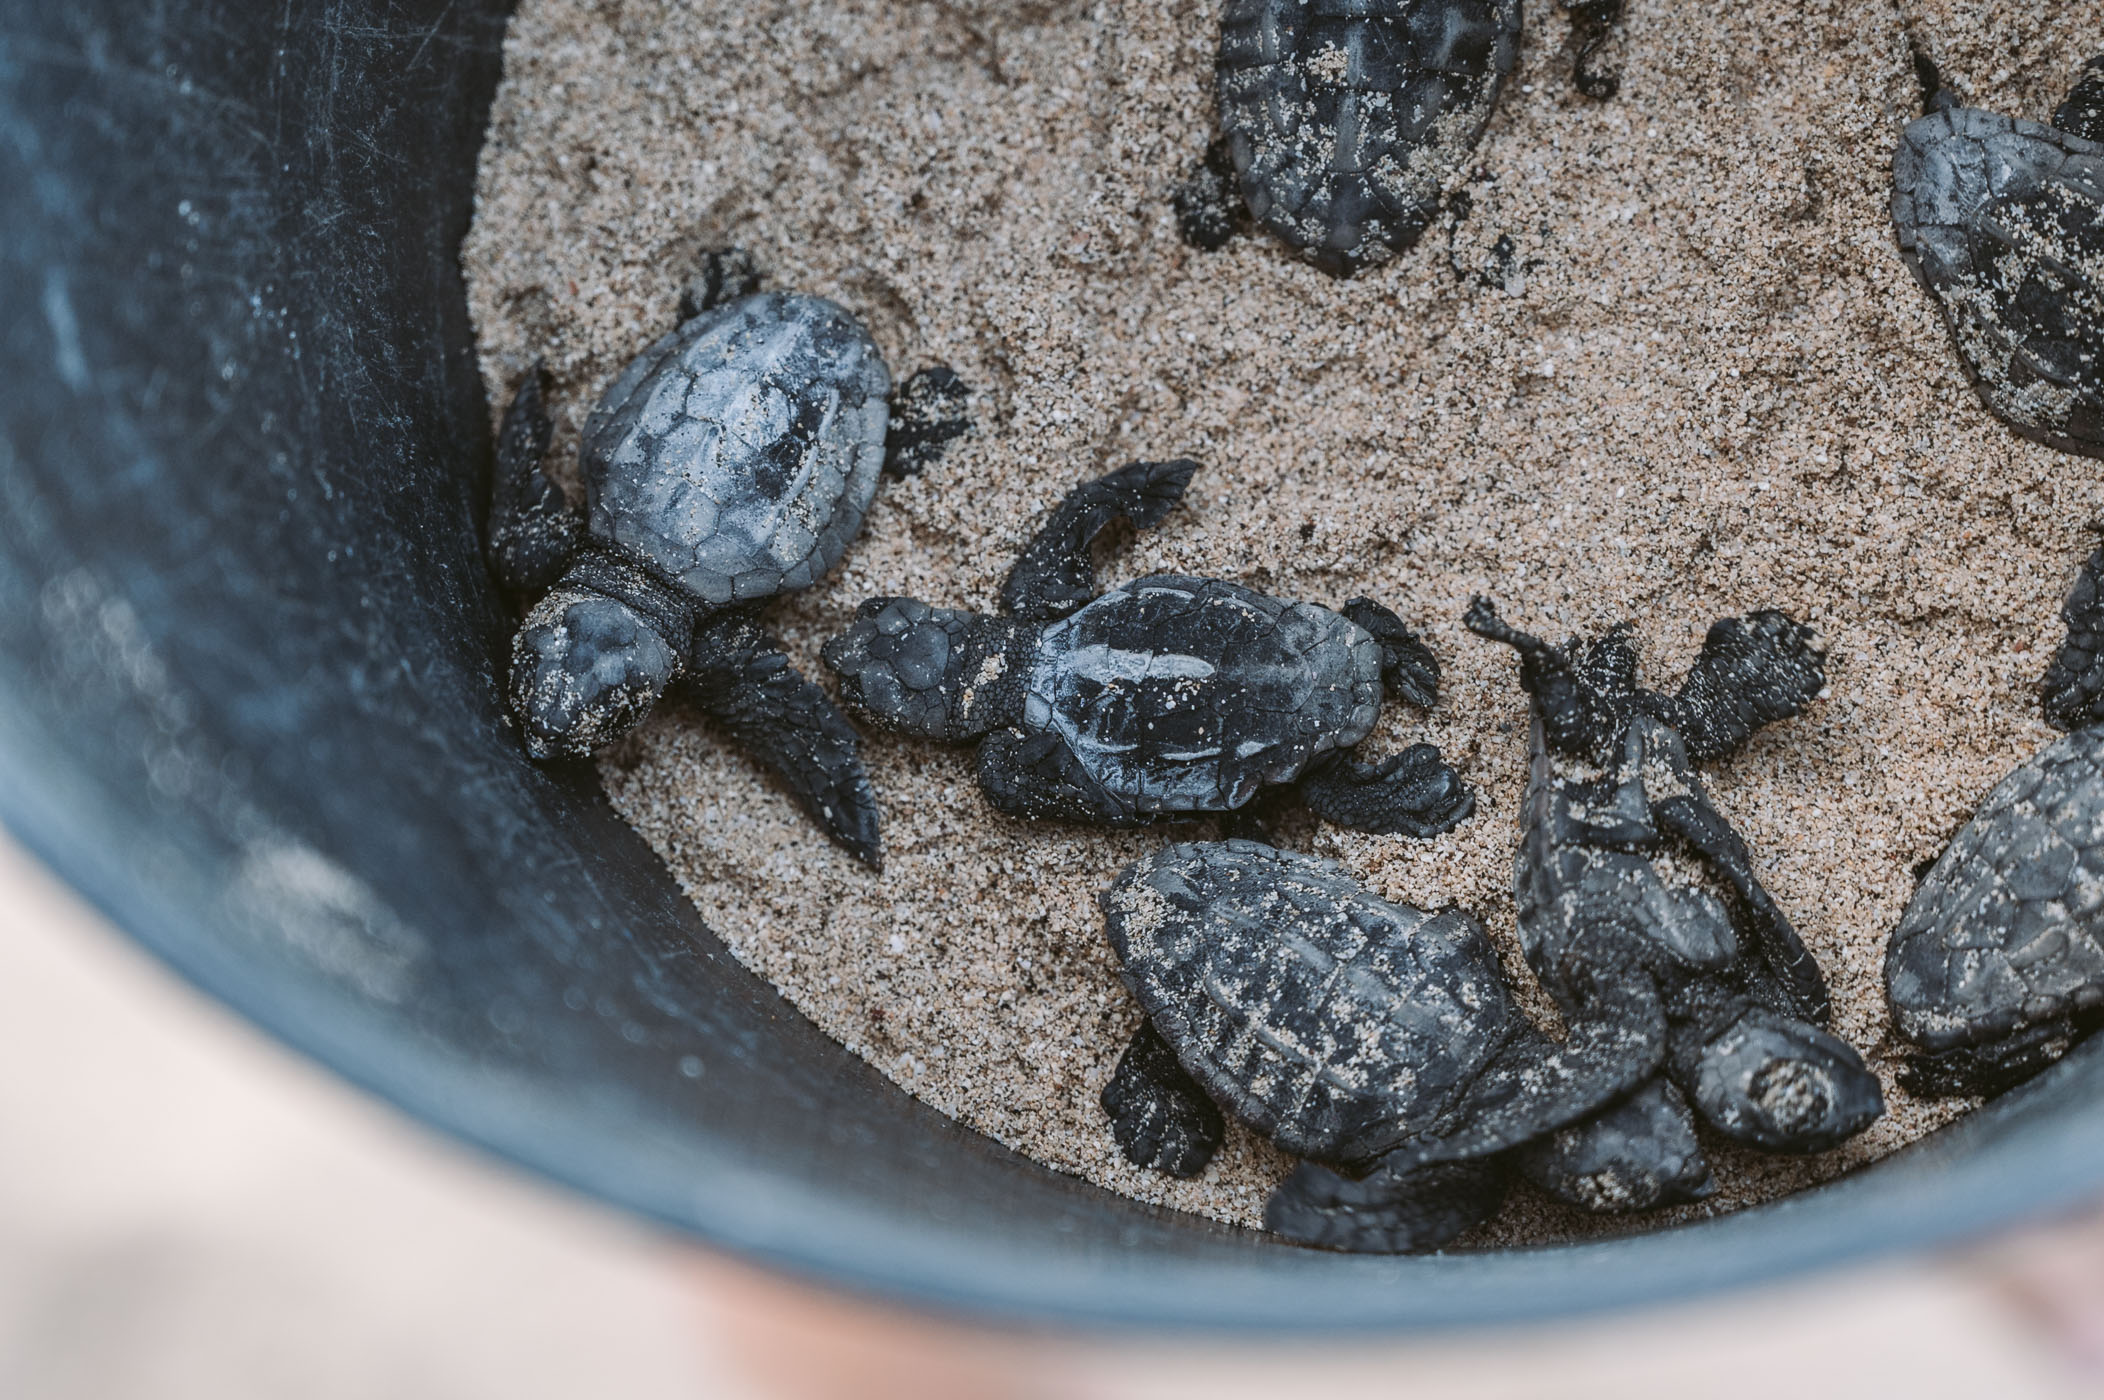 Project Biodiversity Sea Turtle hatchery on Sal Cape Verde